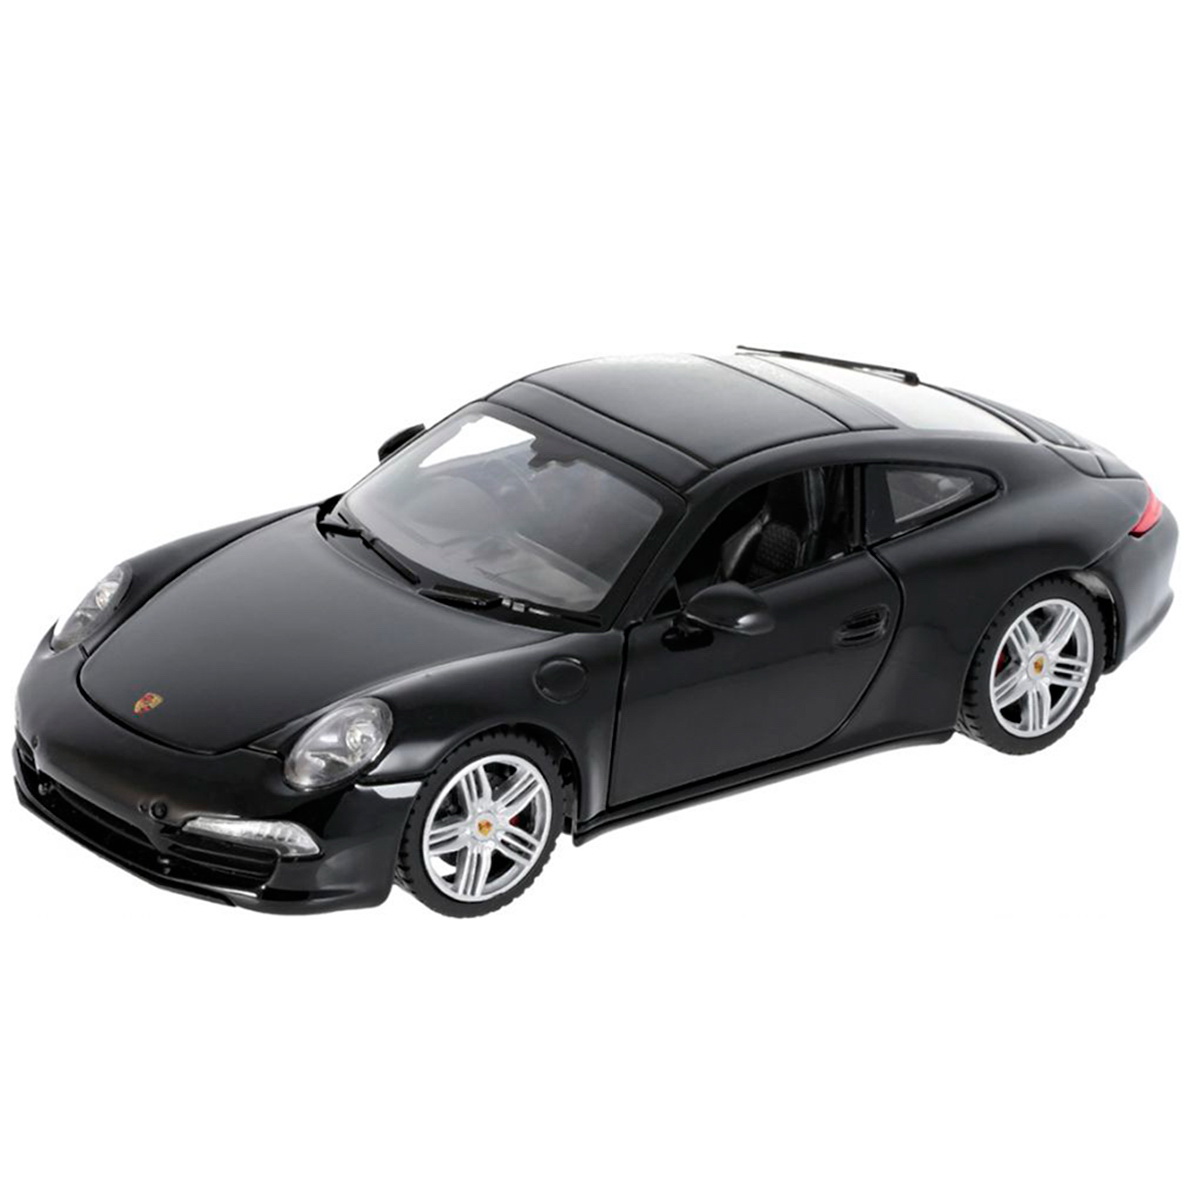 Masinuta metalica Porsche 911, scara 1 la 24, Negru, Rastar